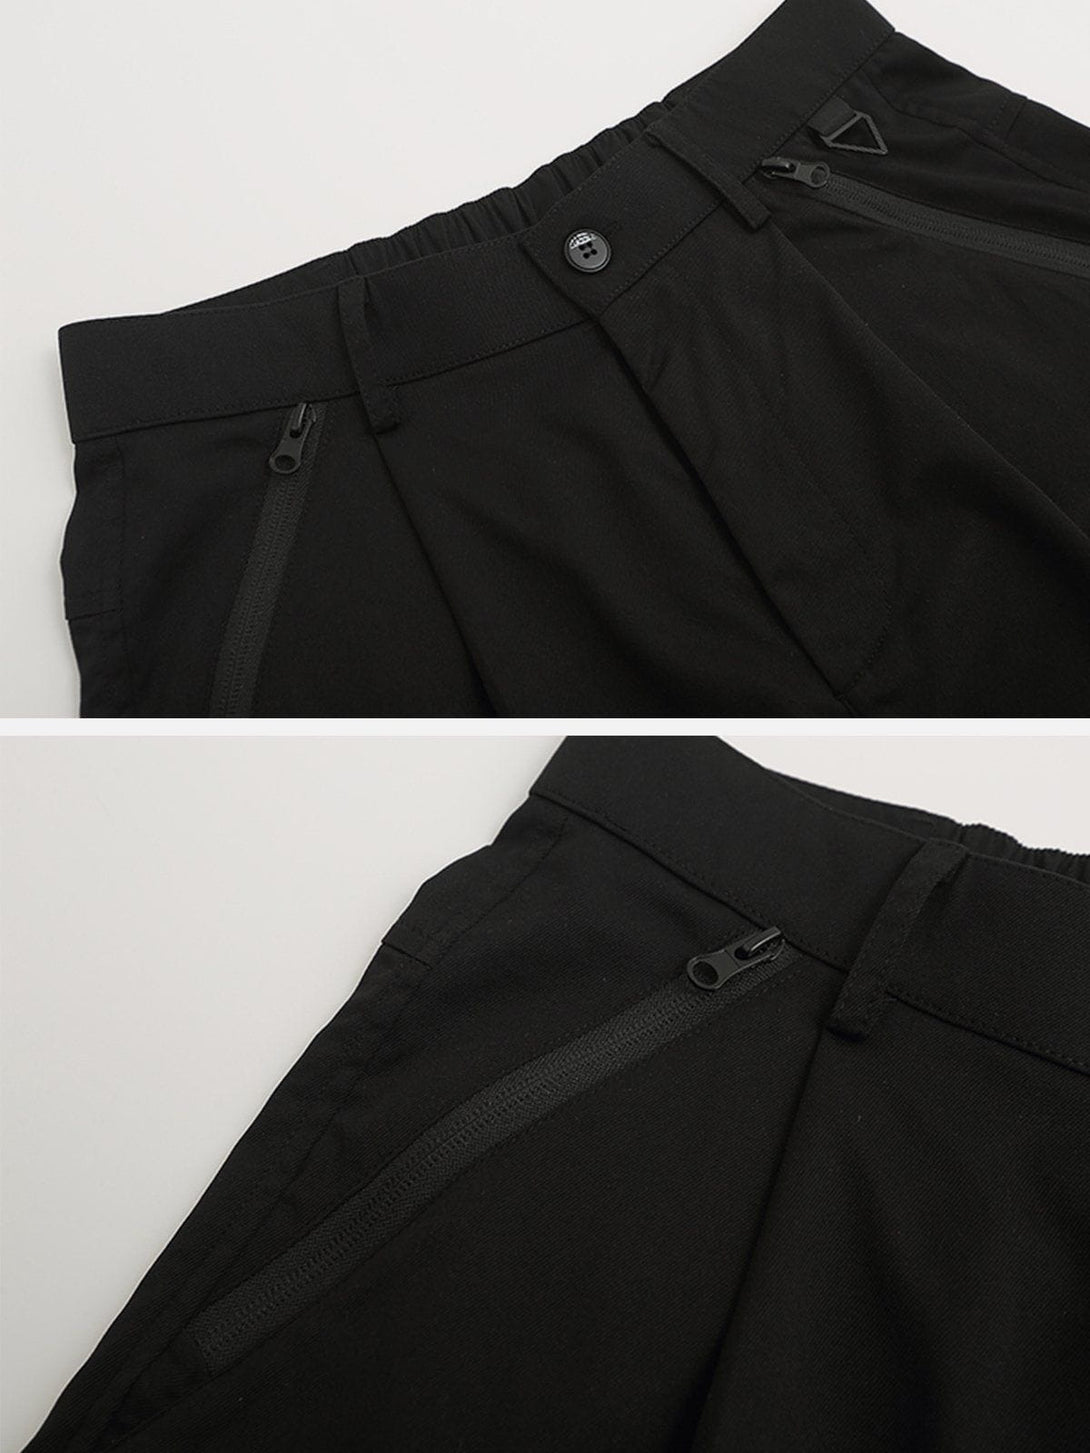 AlanBalen® - Solid Color Pocket Cargo Shorts AlanBalen